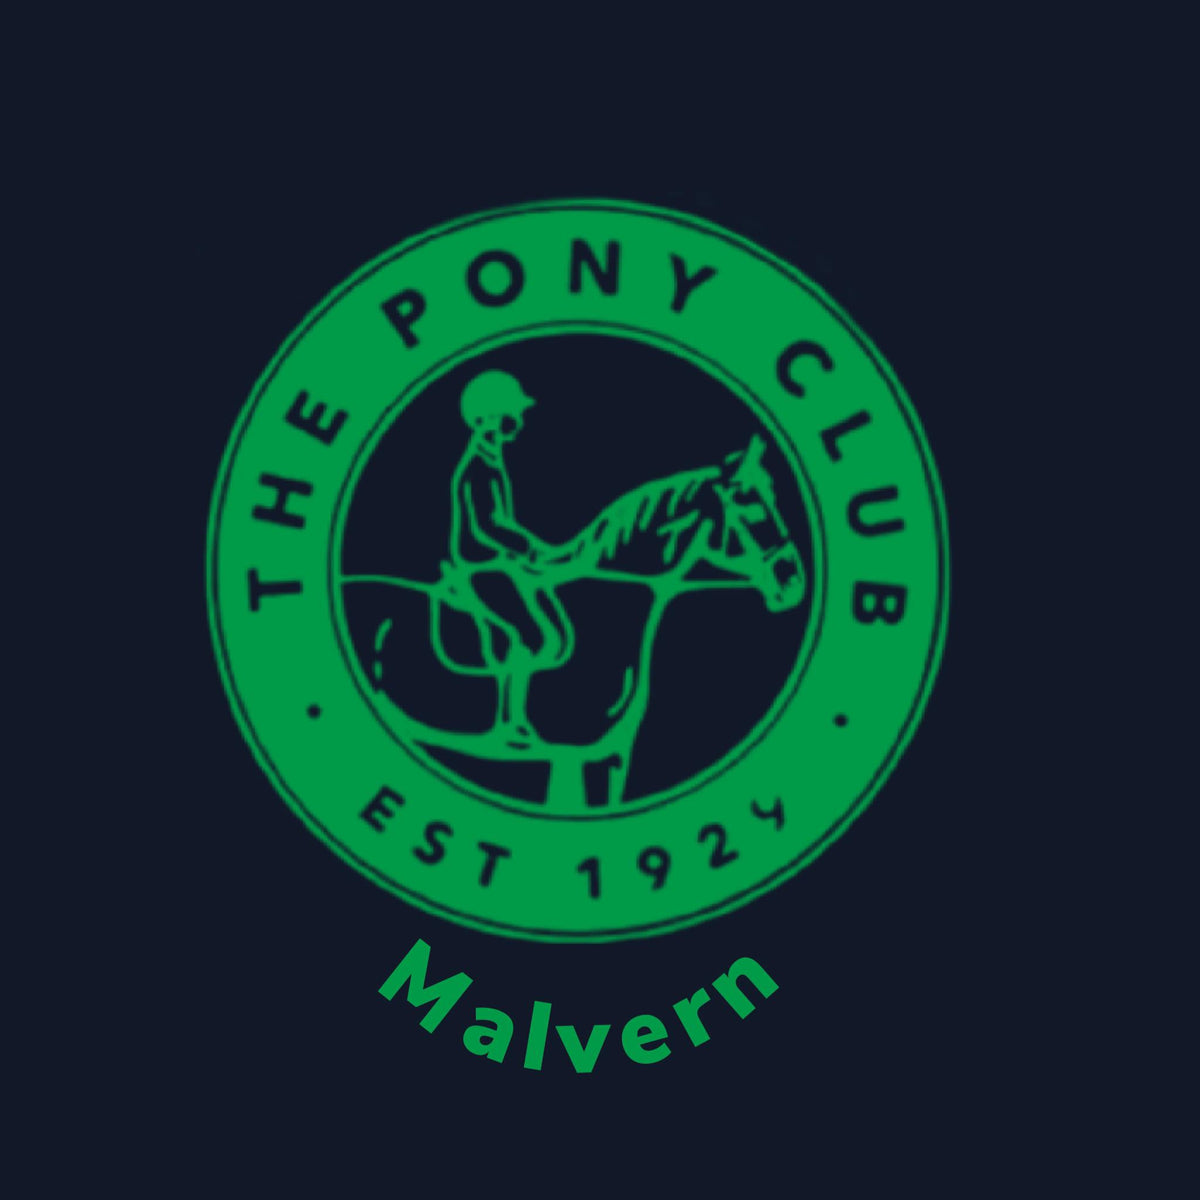 Malvern Pony Club